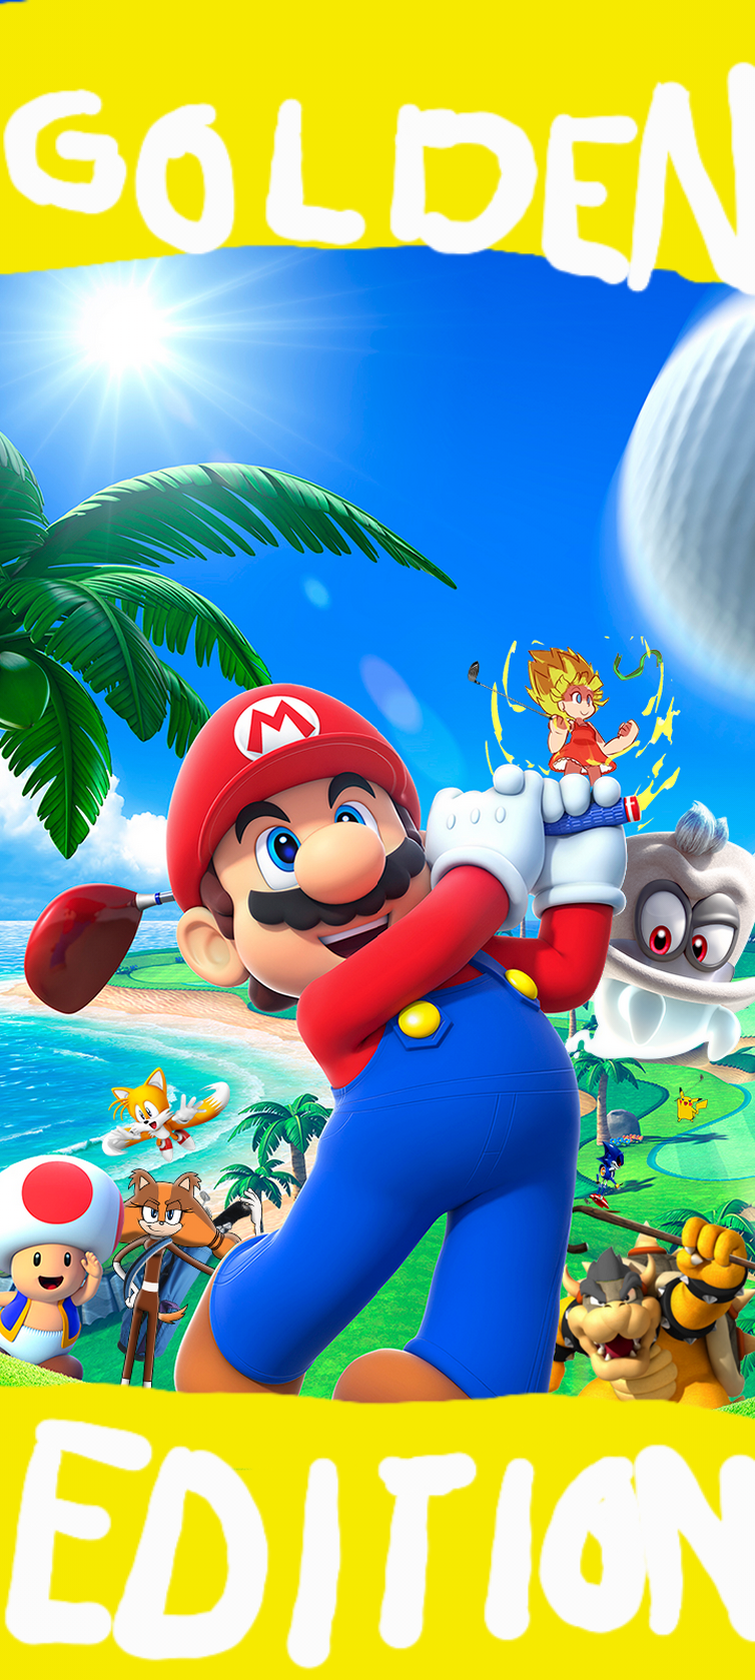 Bowser Jr. - Mario Golf World Tour Guide - IGN